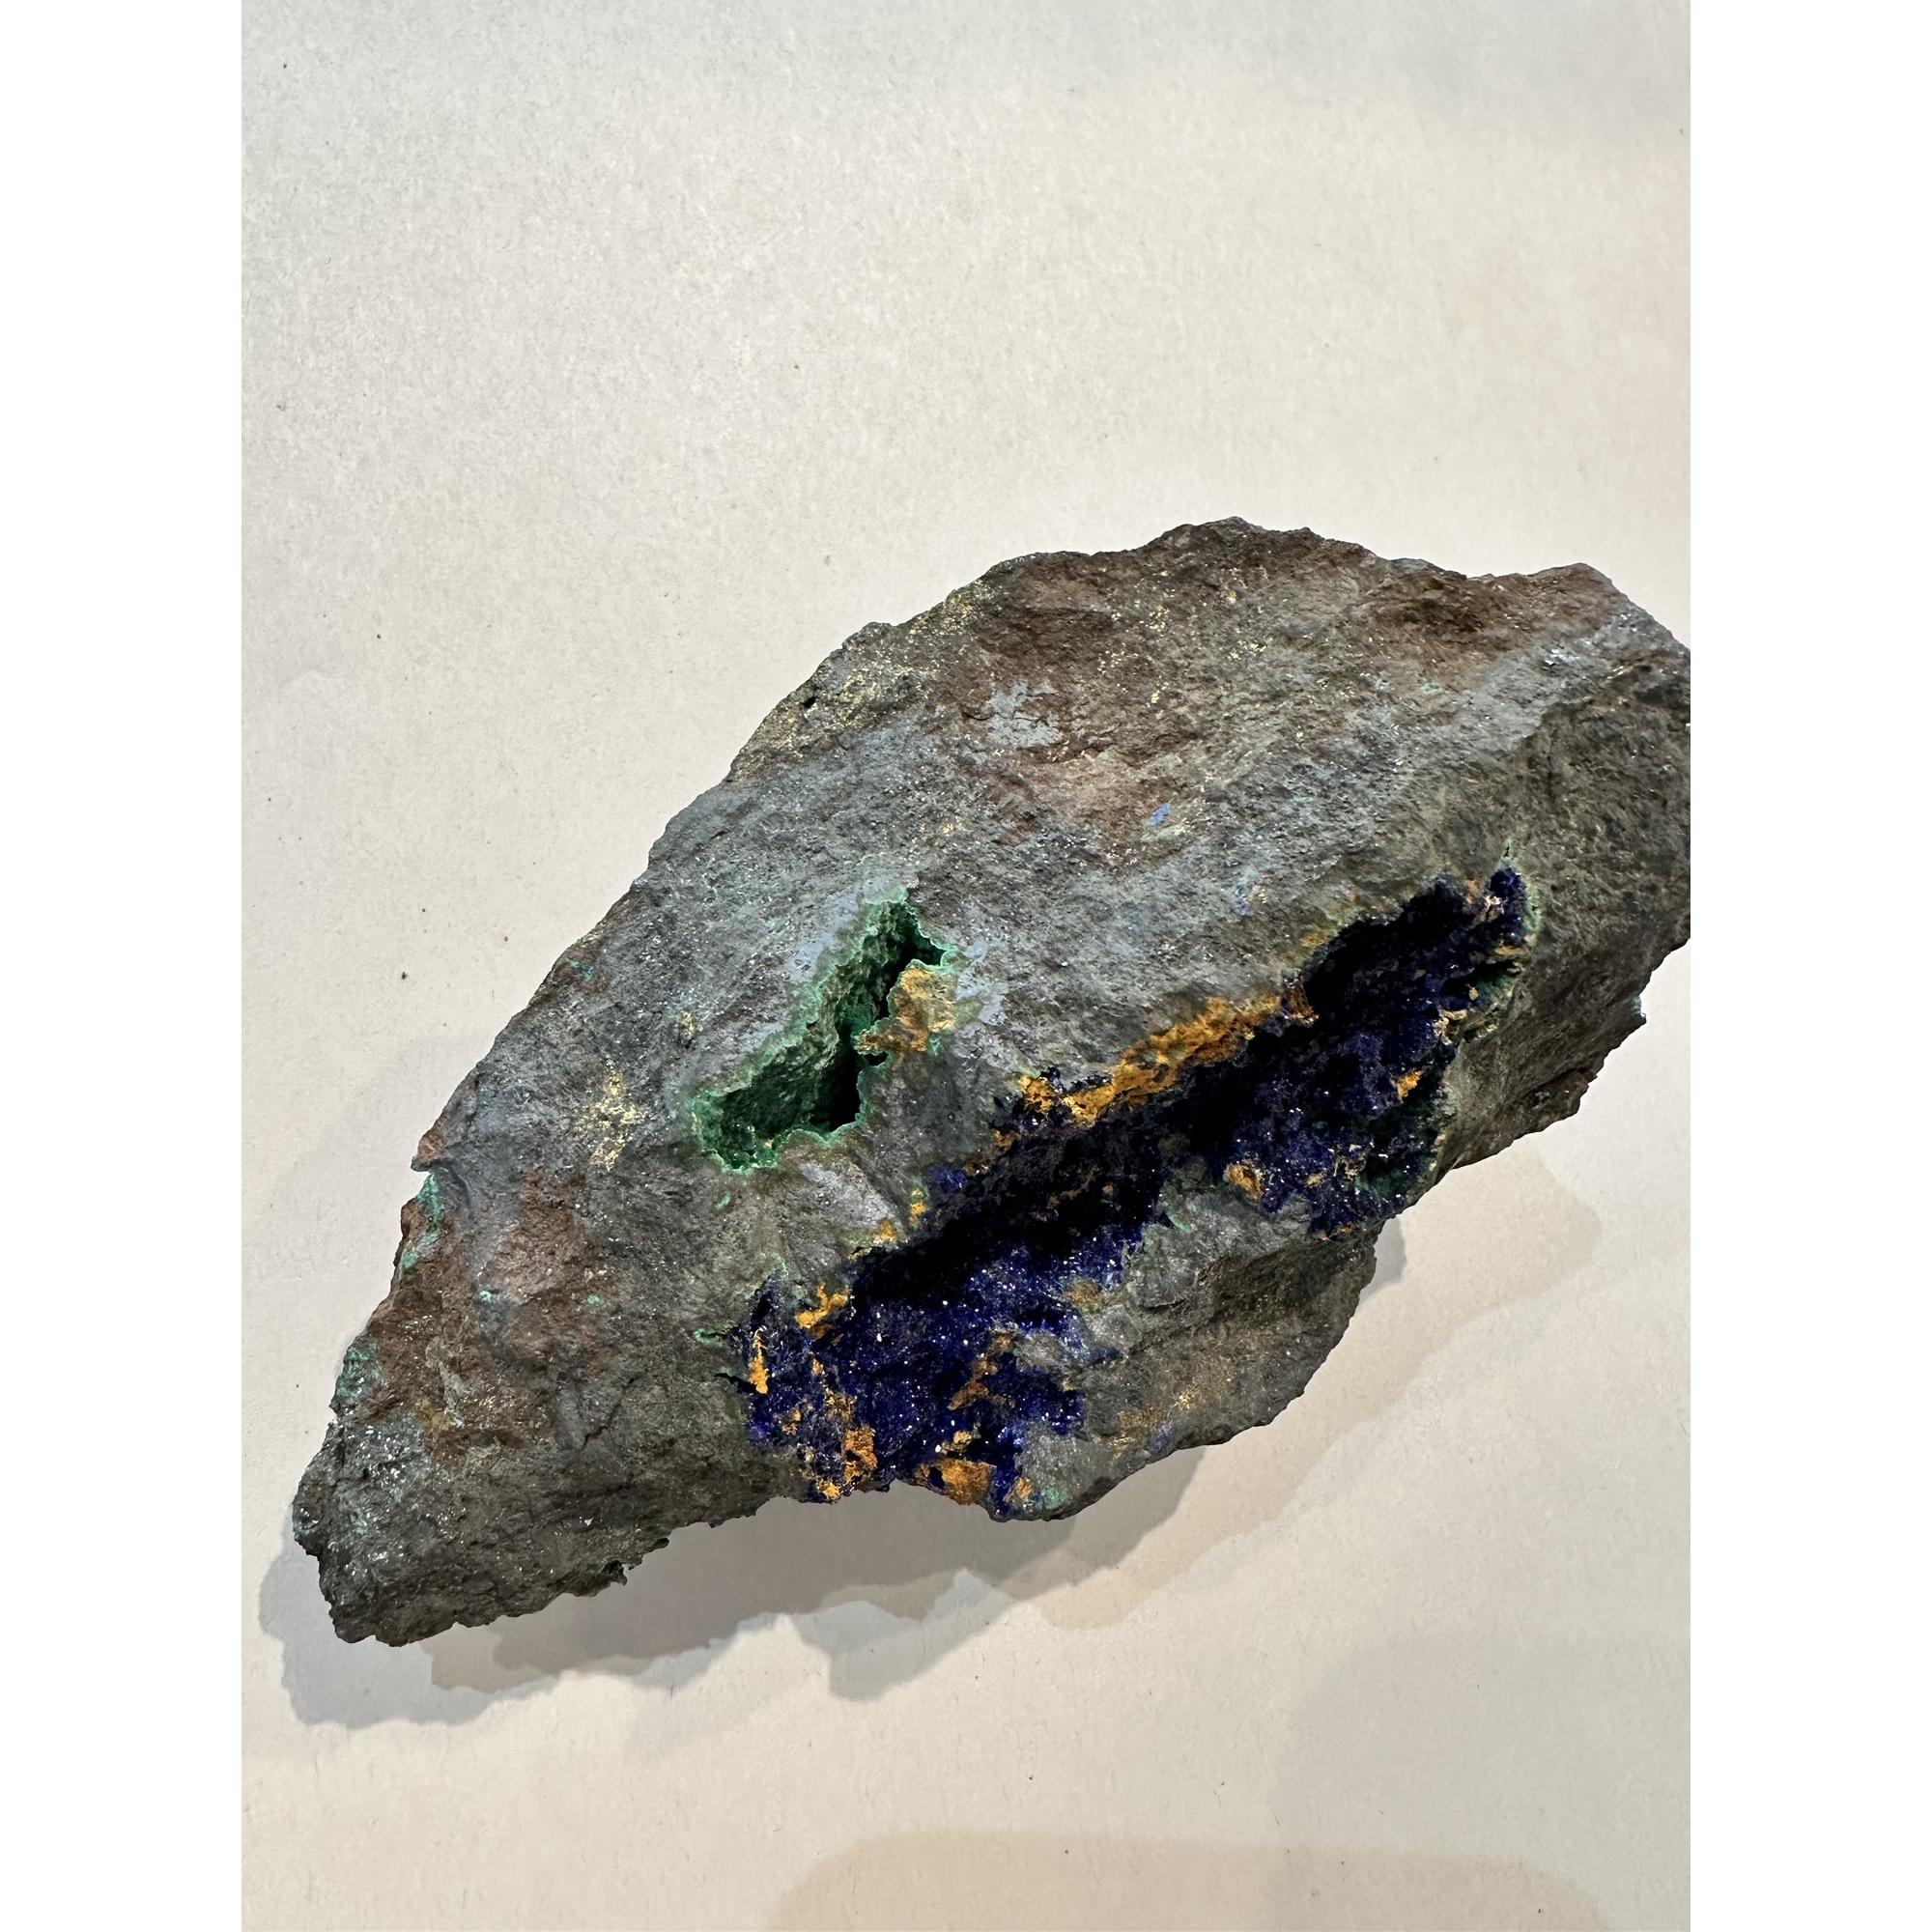 Azurite, Malachite,  Stone of Transformation Prehistoric Online